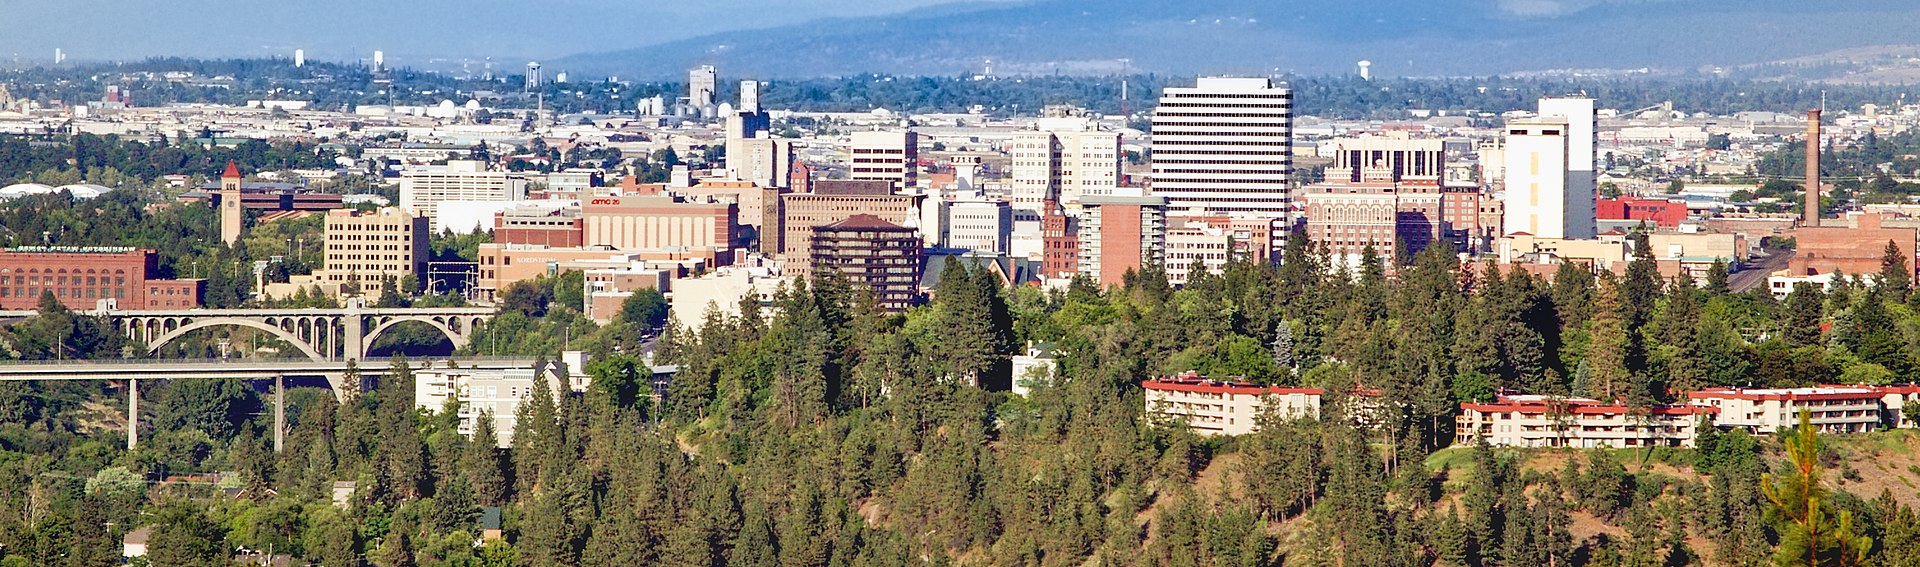 Places To Visit In Spokane Washington